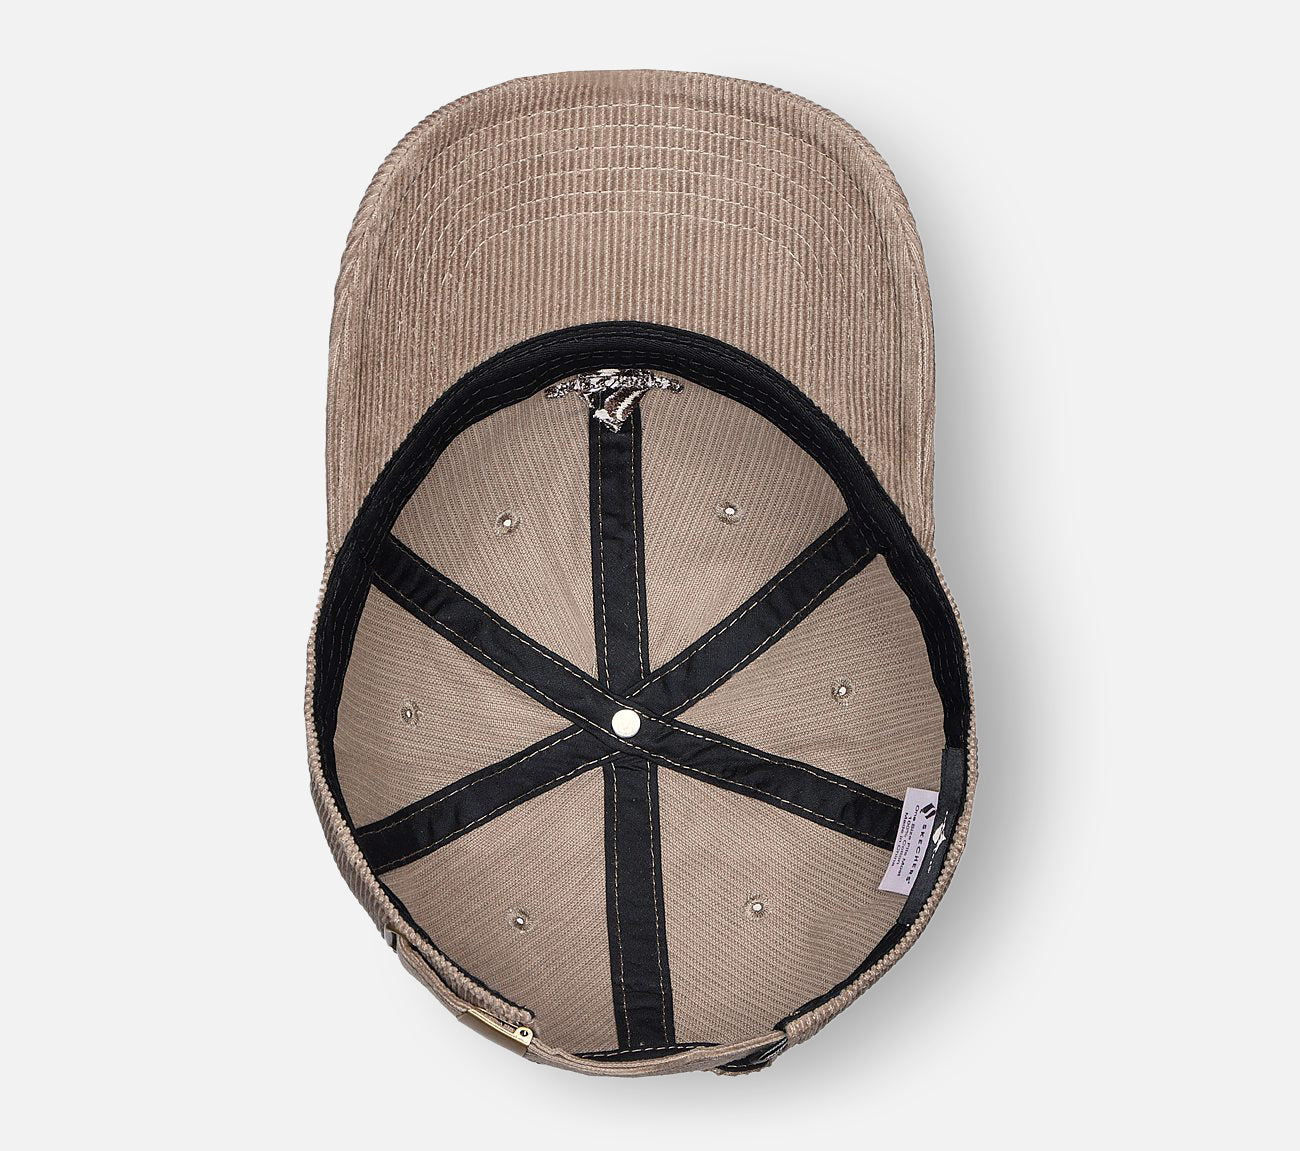 Diamond Cord Adjustable Baseball Hat Hat Skechers